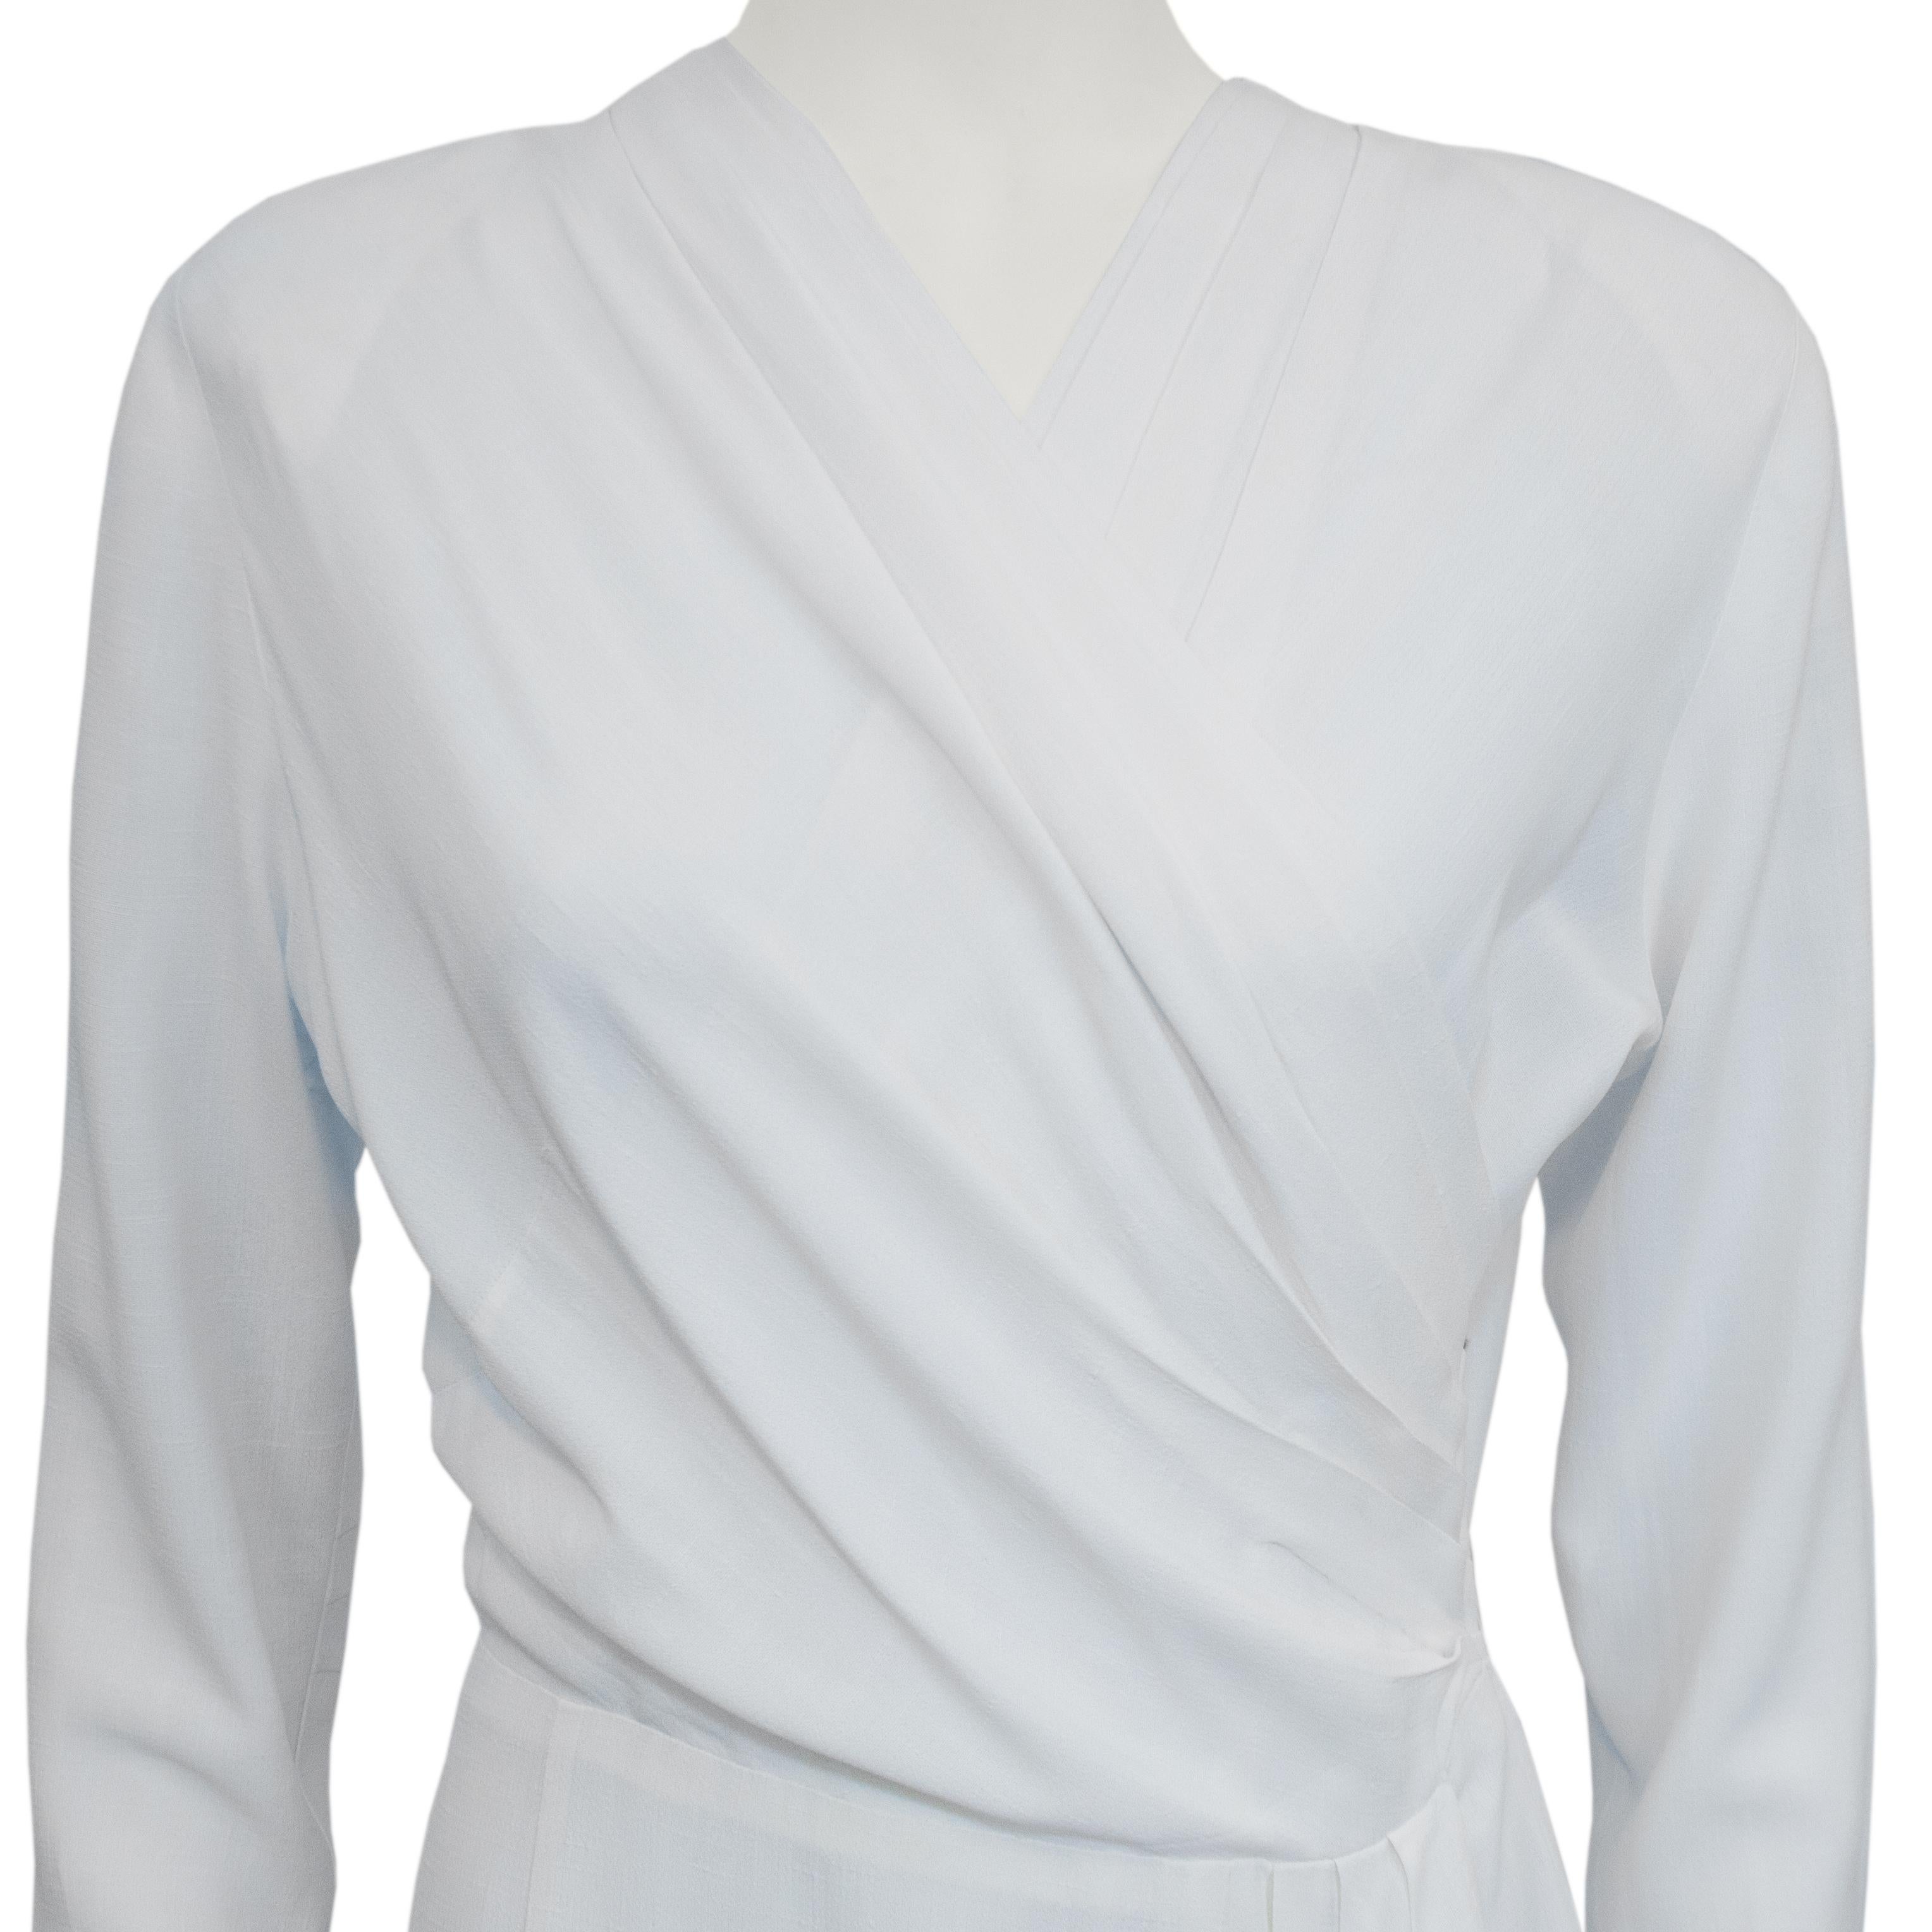 Robe drapée en crêpe de rayonne blanc des années 1940 de style Hollywood ancien Bon état - En vente à Toronto, Ontario